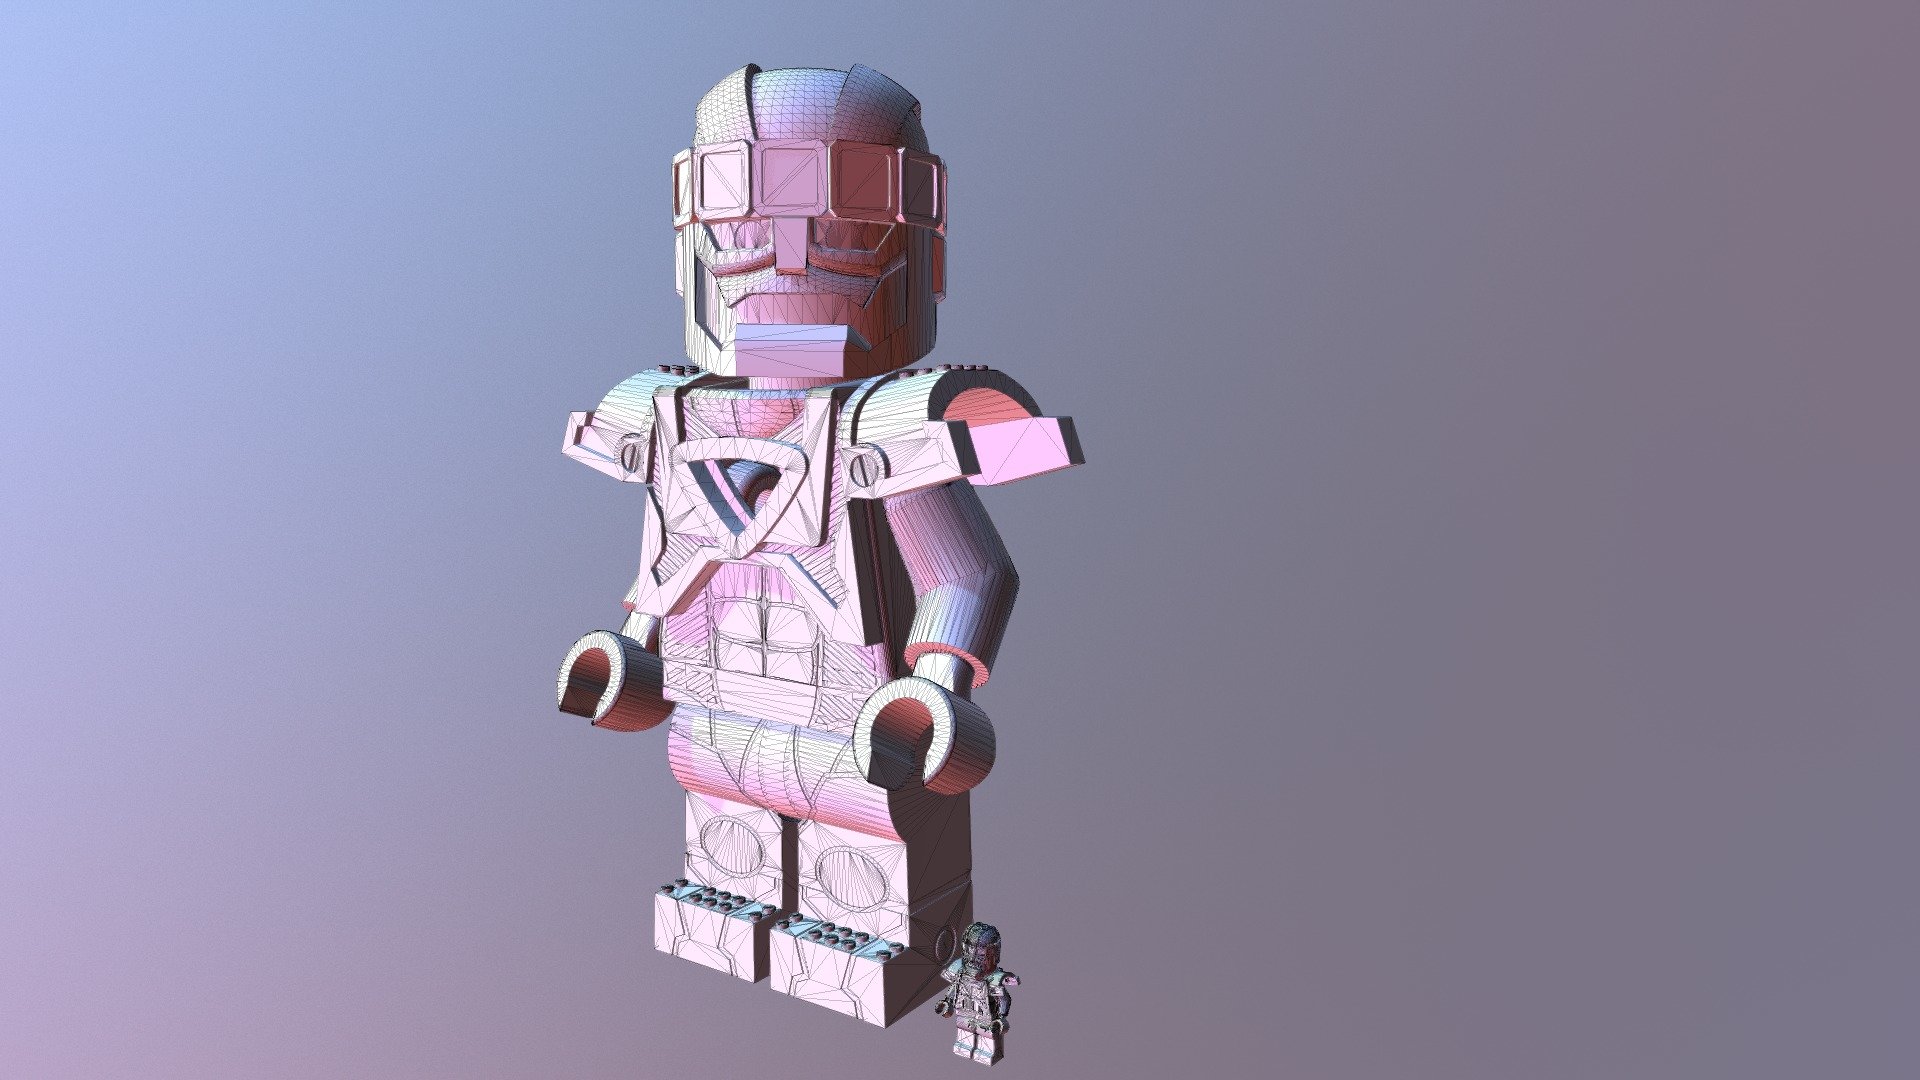 lego-sentinel-lego-marvel-superheroes-videogame-3d-model-by-asylum